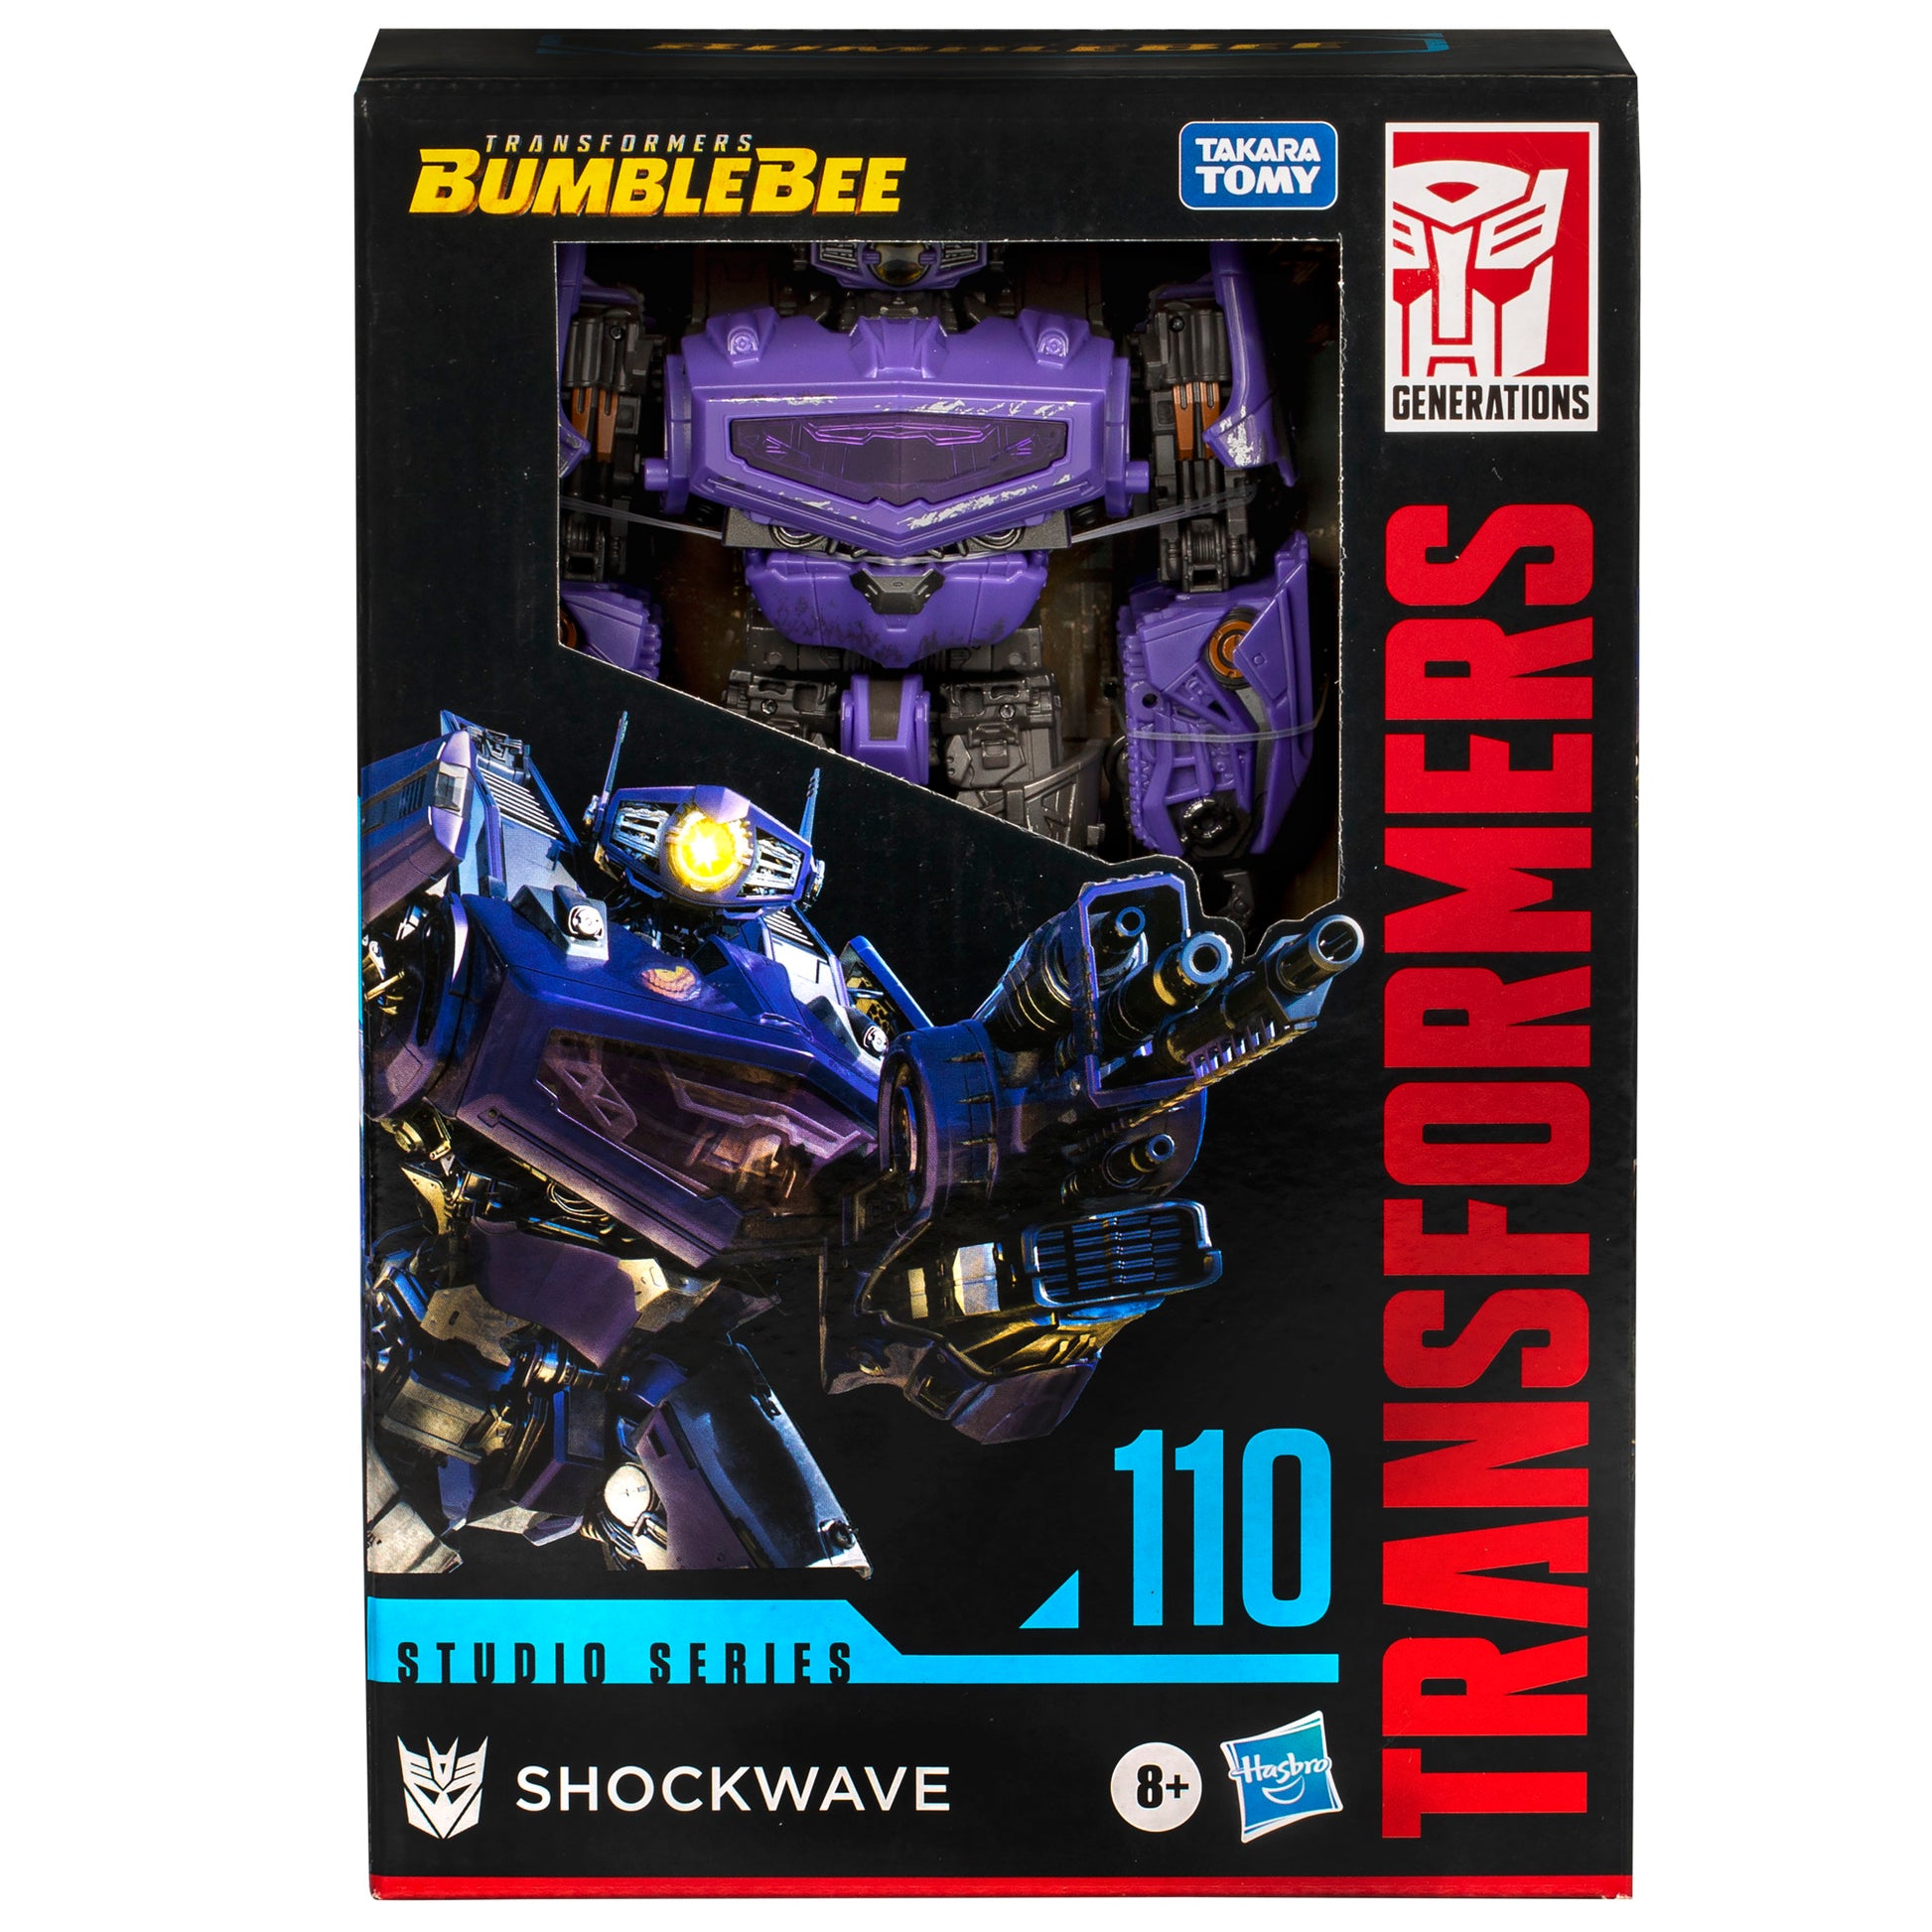 Transformers Studio Series Voyager Transformers: Bumblebee 110 Shockwave Action Figure